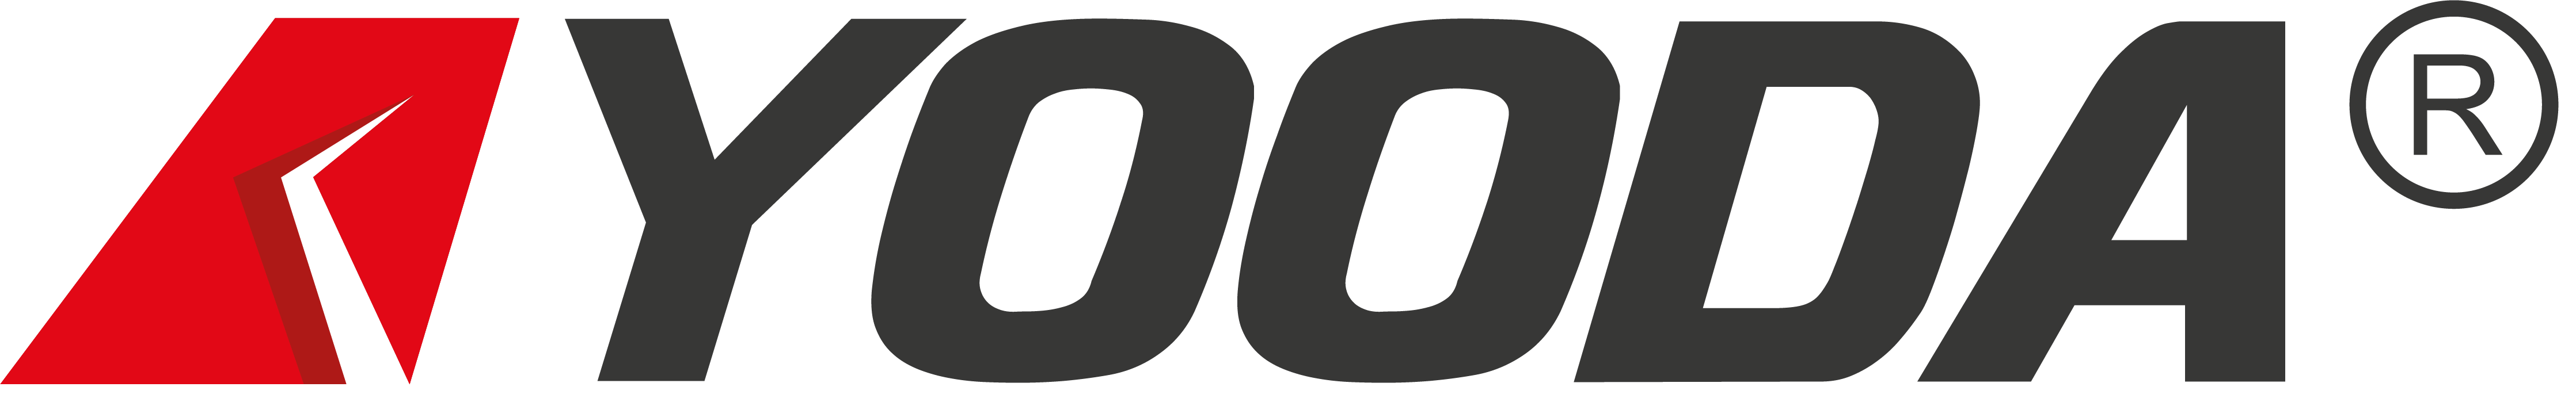 YOODA logo ciemne